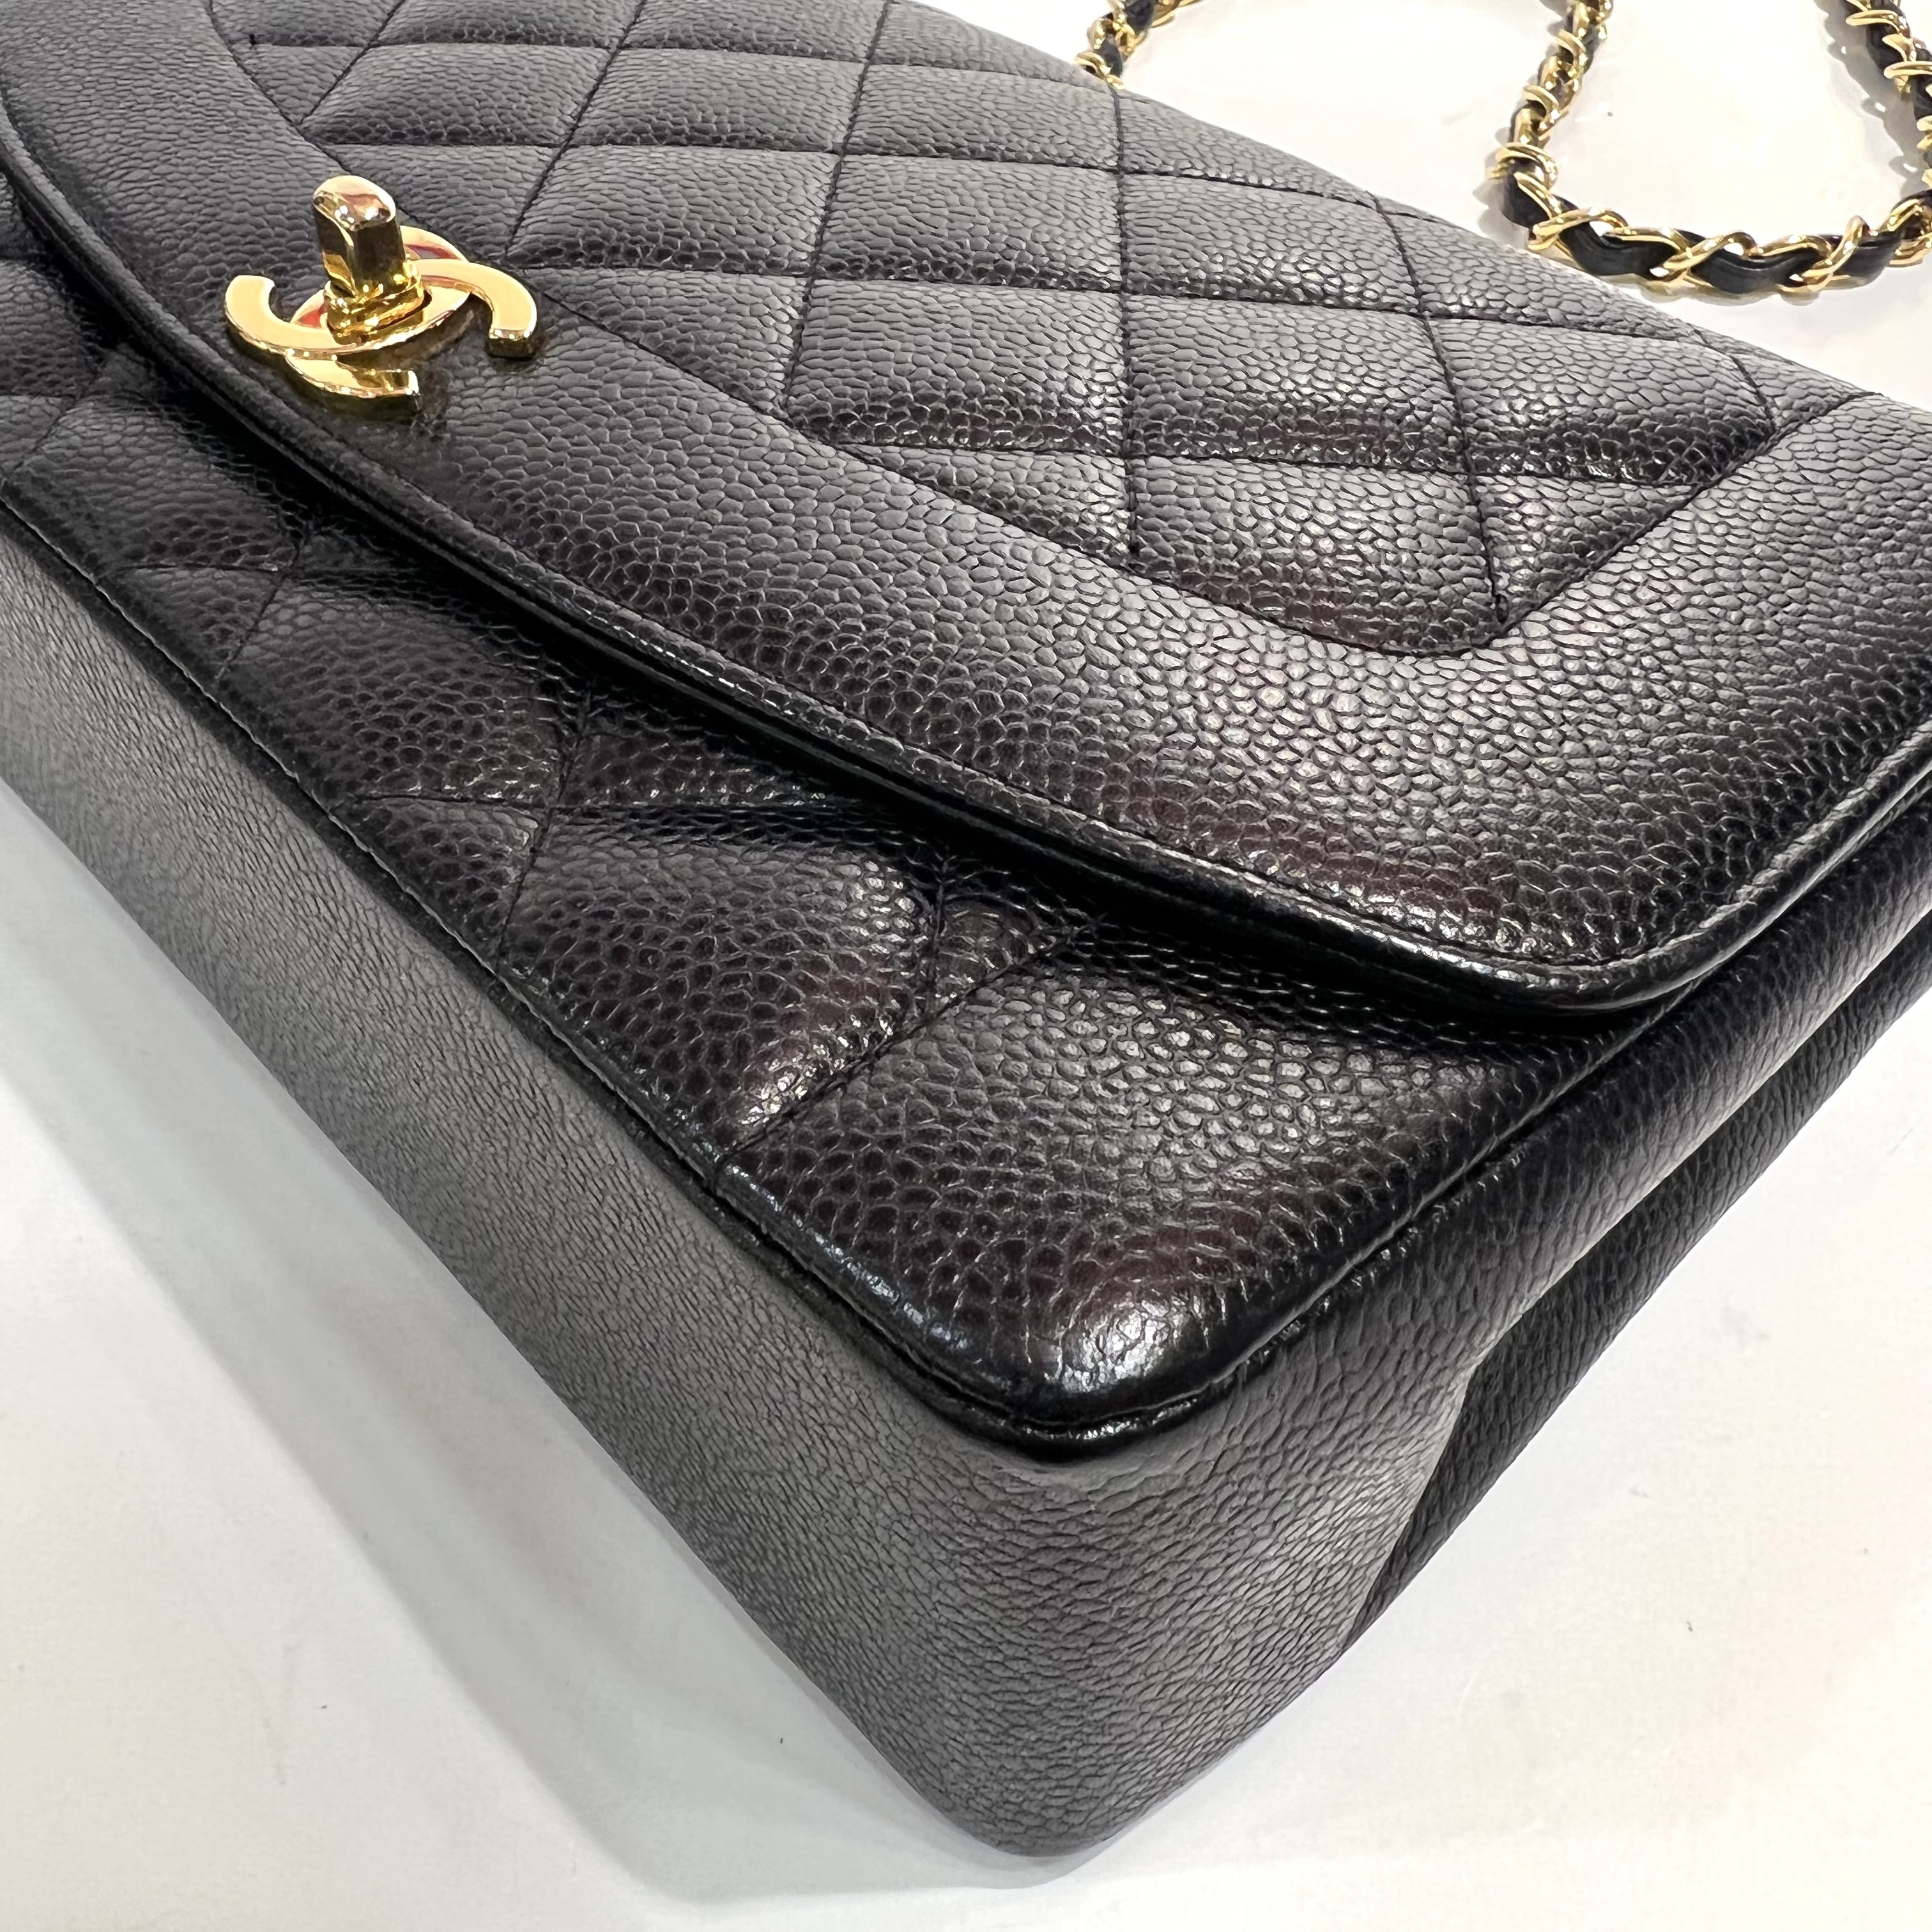 Vintage CHANEL Diana Small Flap Bag - Black 006 – YST.vintage